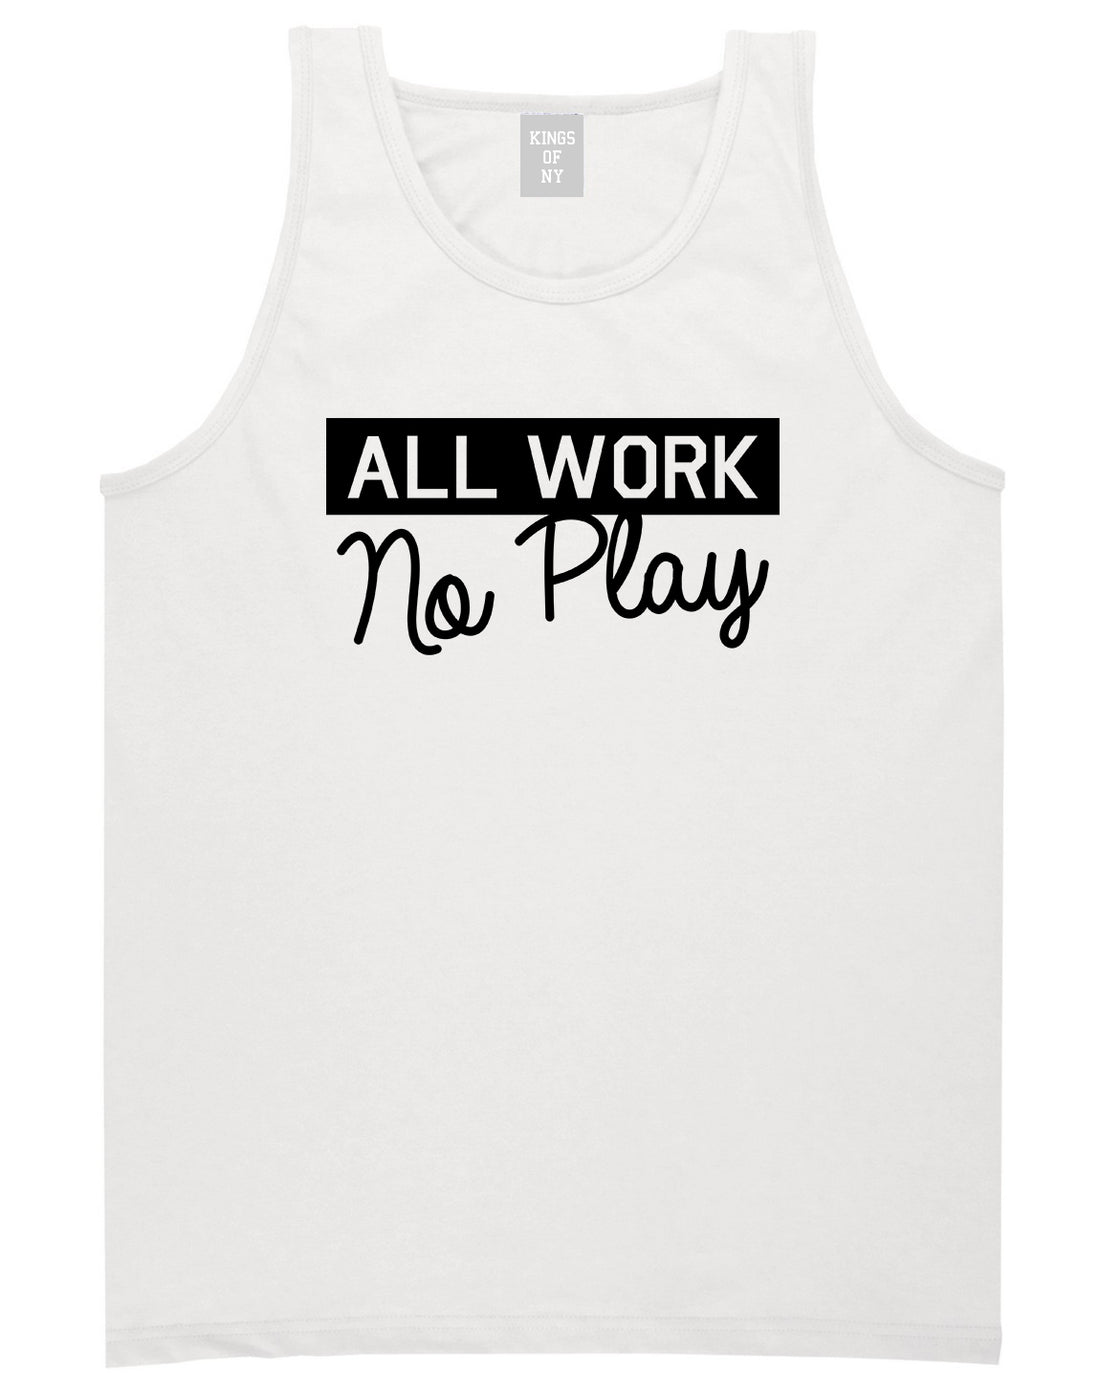 All Work No Play Mens Tank Top T-Shirt White